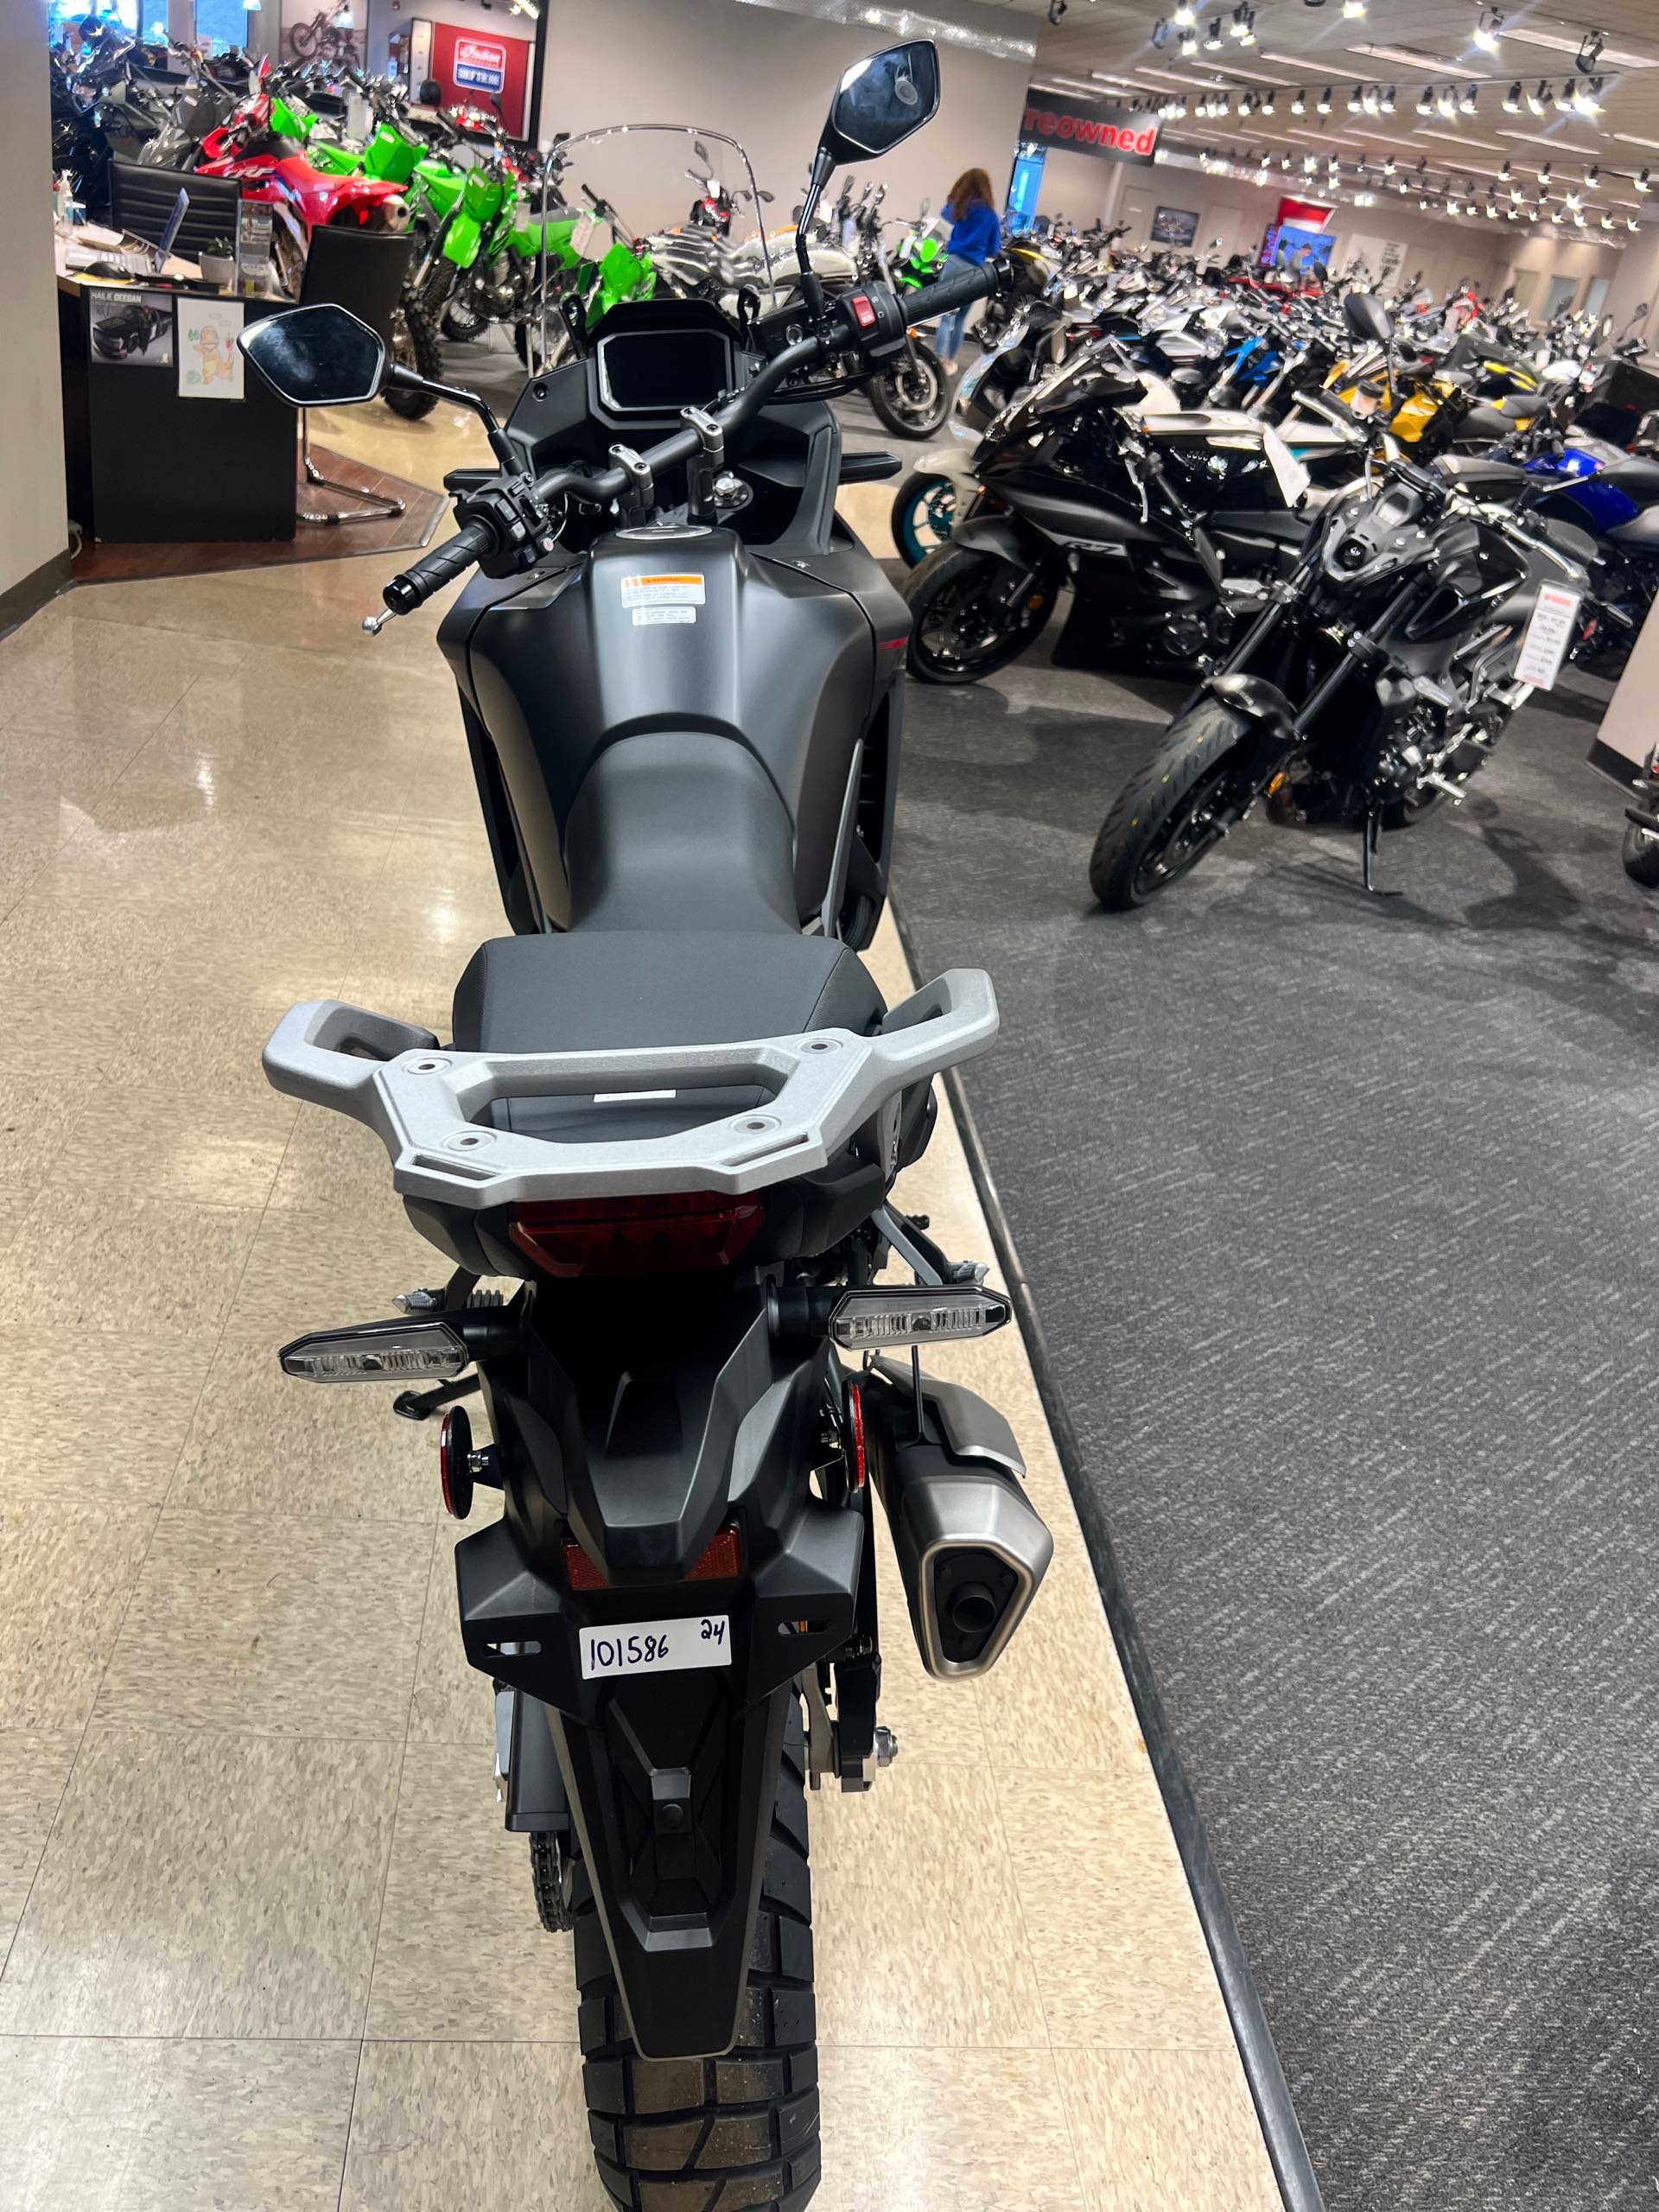 2024 Honda Transalp Base at Sloans Motorcycle ATV, Murfreesboro, TN, 37129